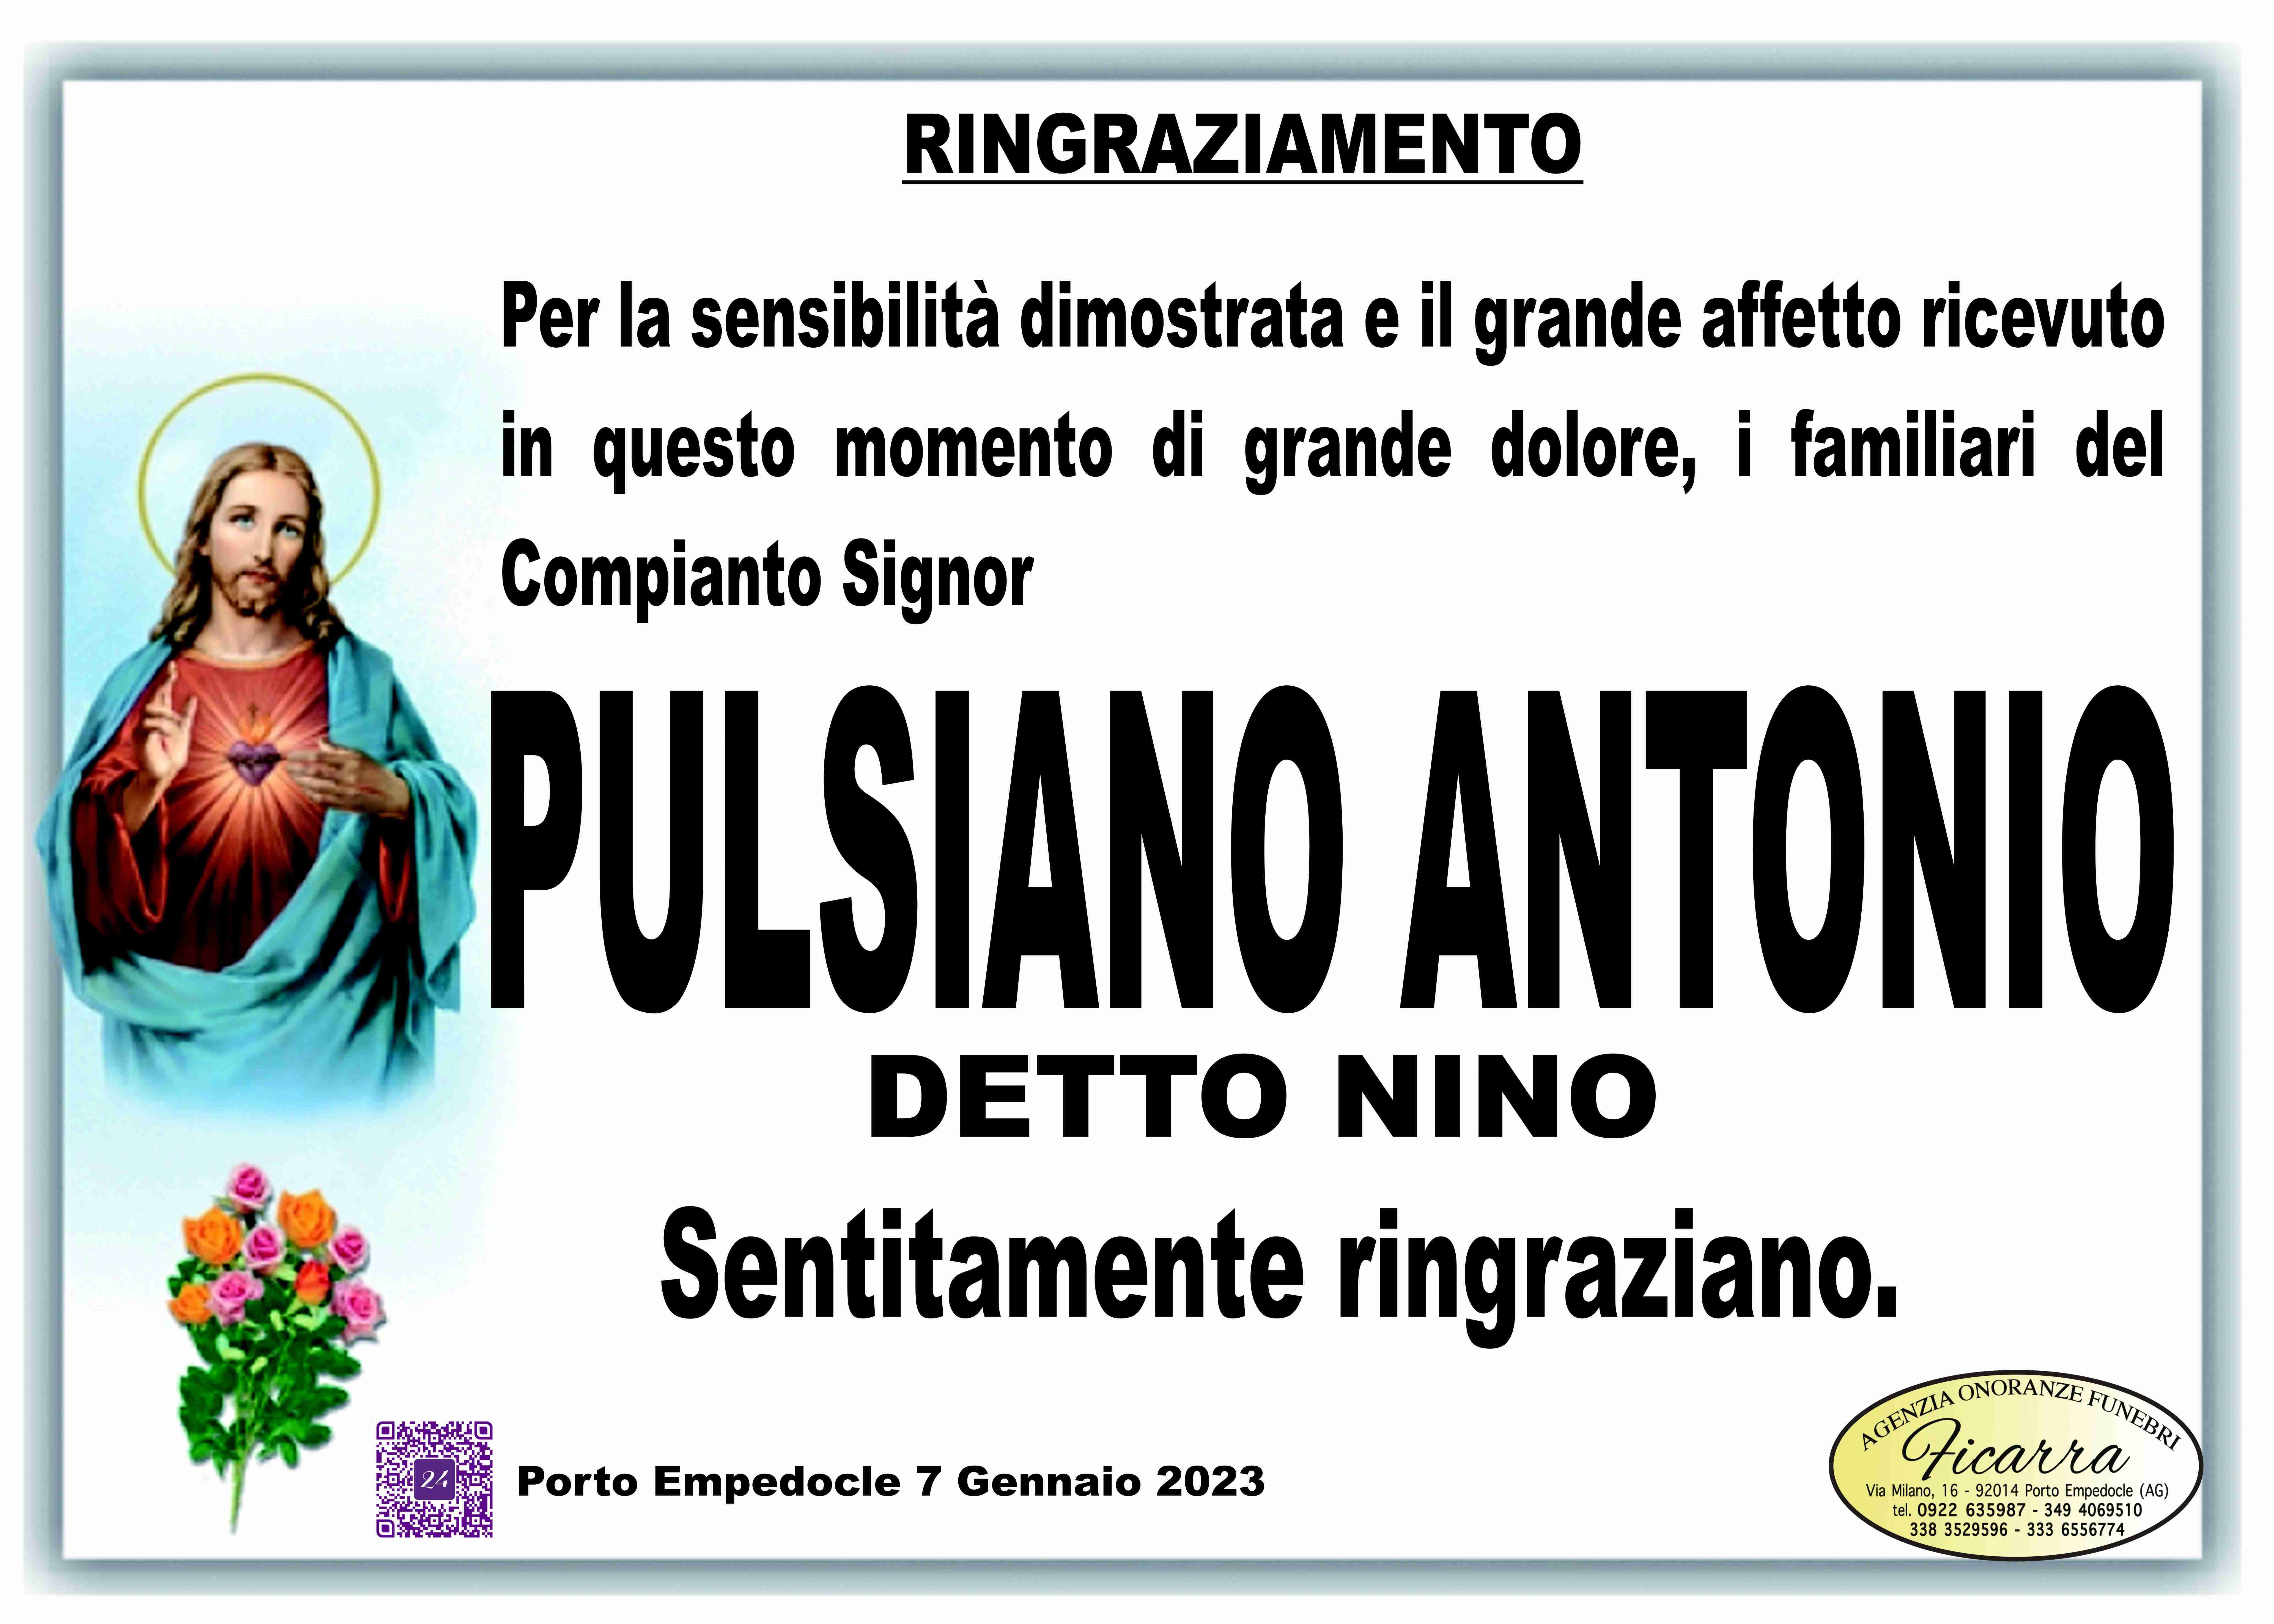 Antonio Pulsiano